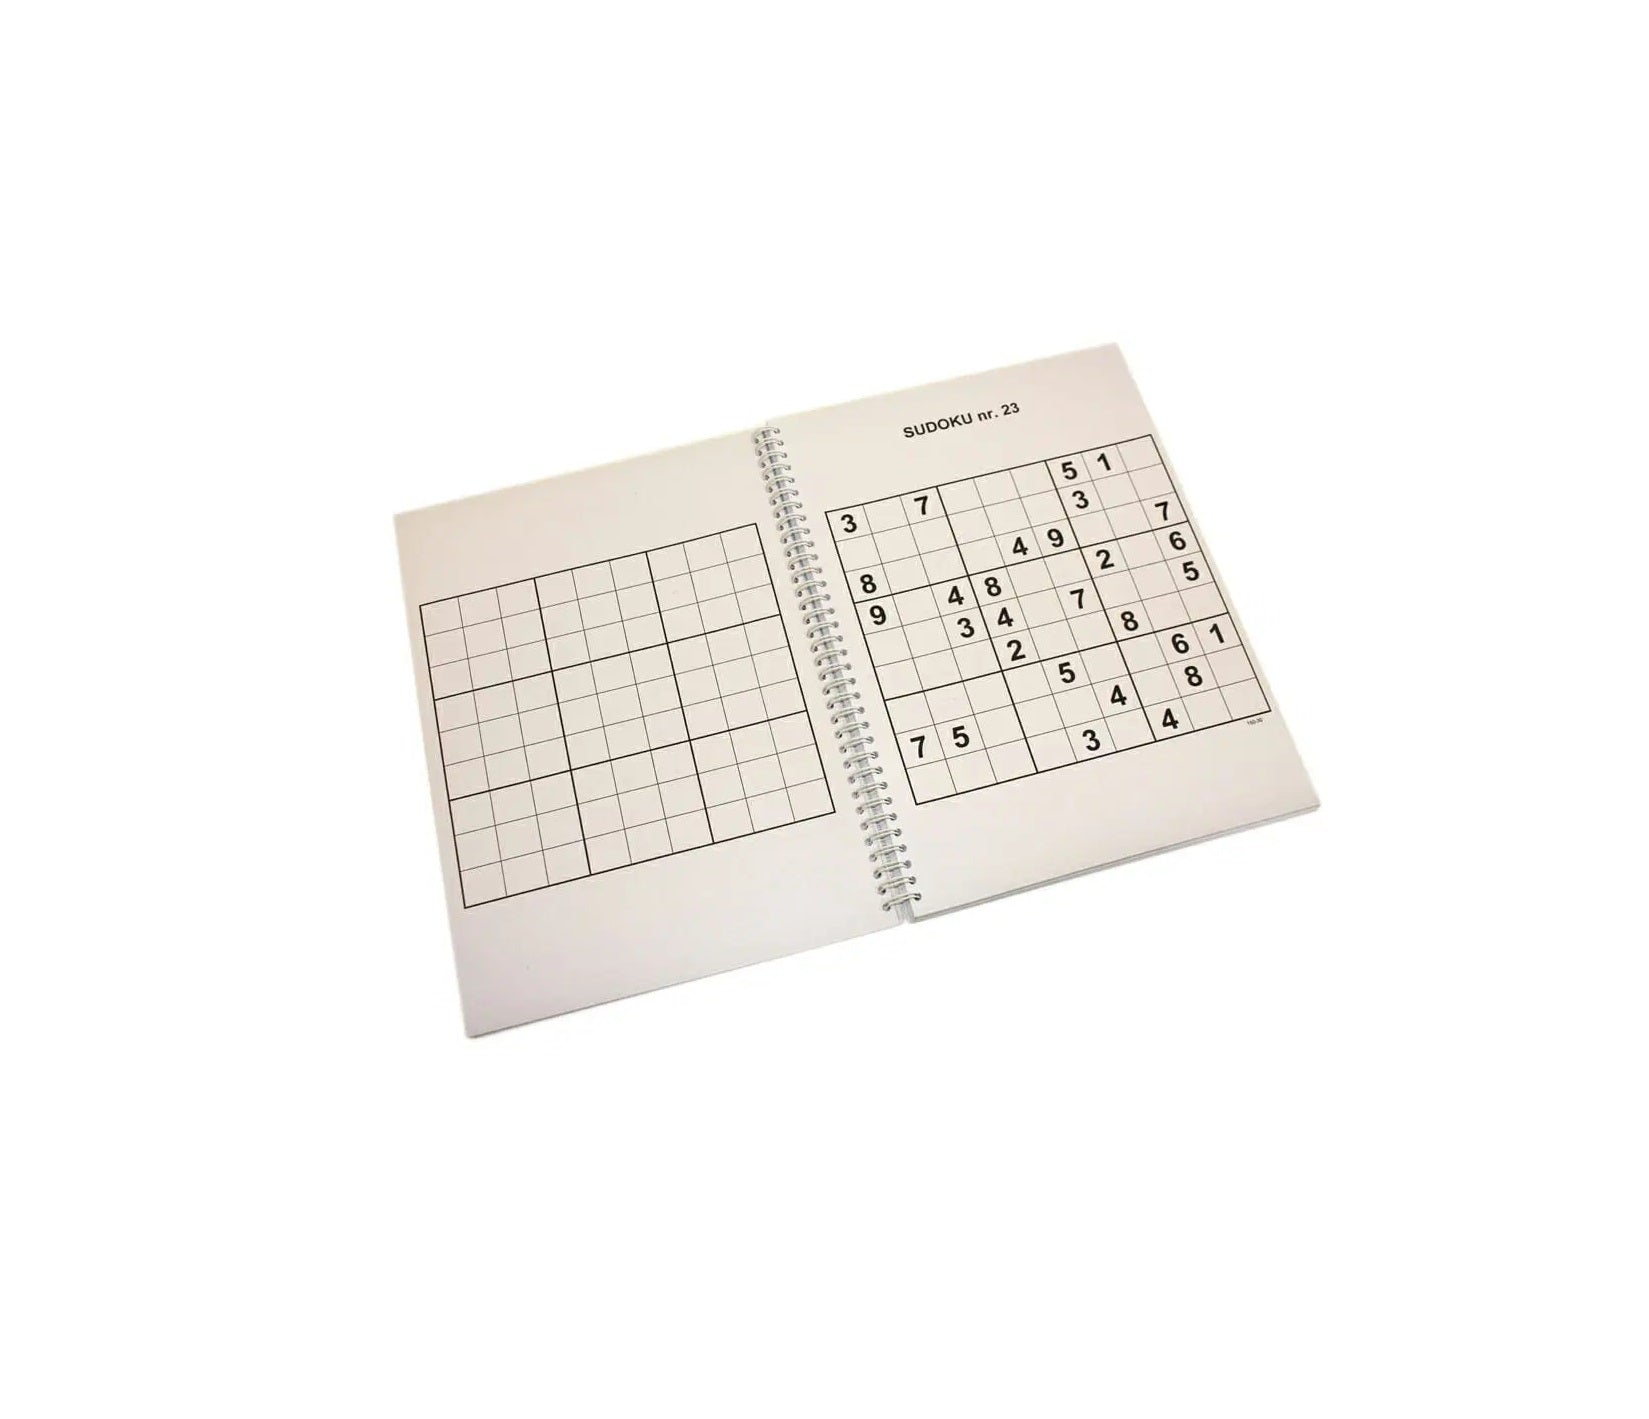 Low Vision Grootletter Sudoku Kopen van  Low Vision?- Vanaf €48.95 bij Pucshop.nl